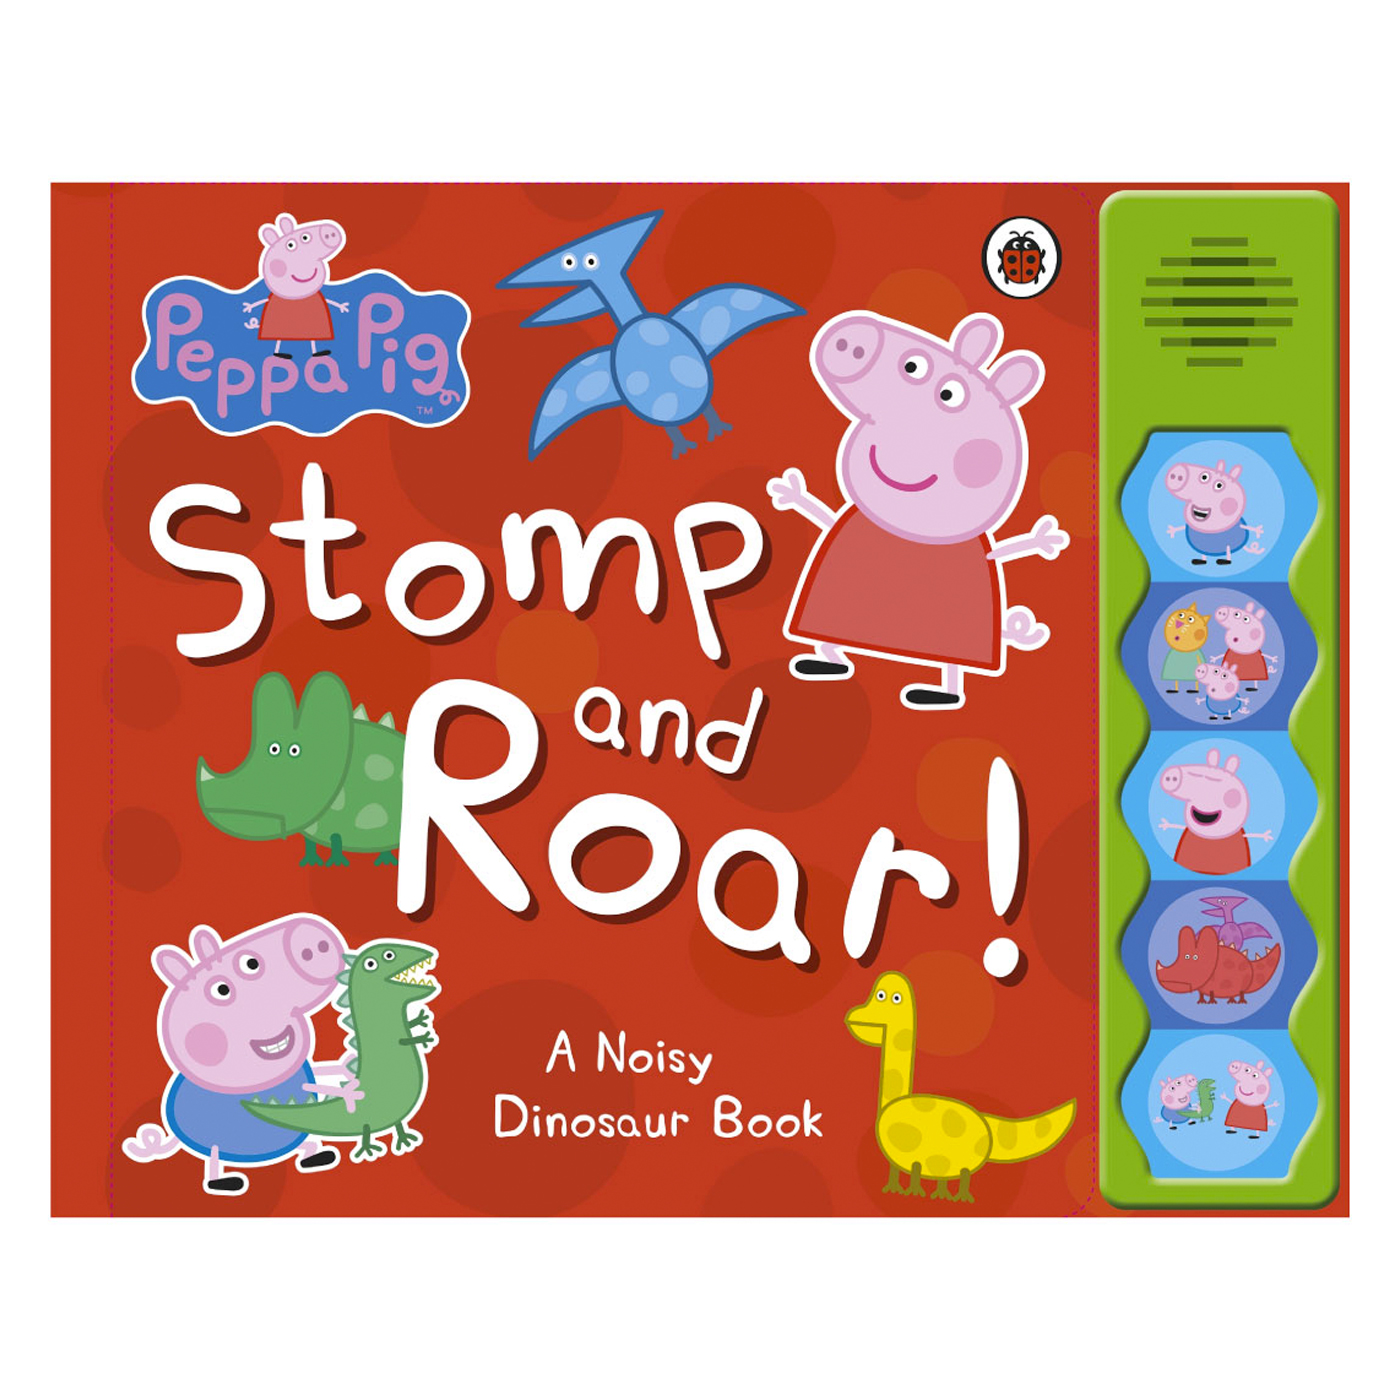  Peppa Pig: Stomp and Roar!